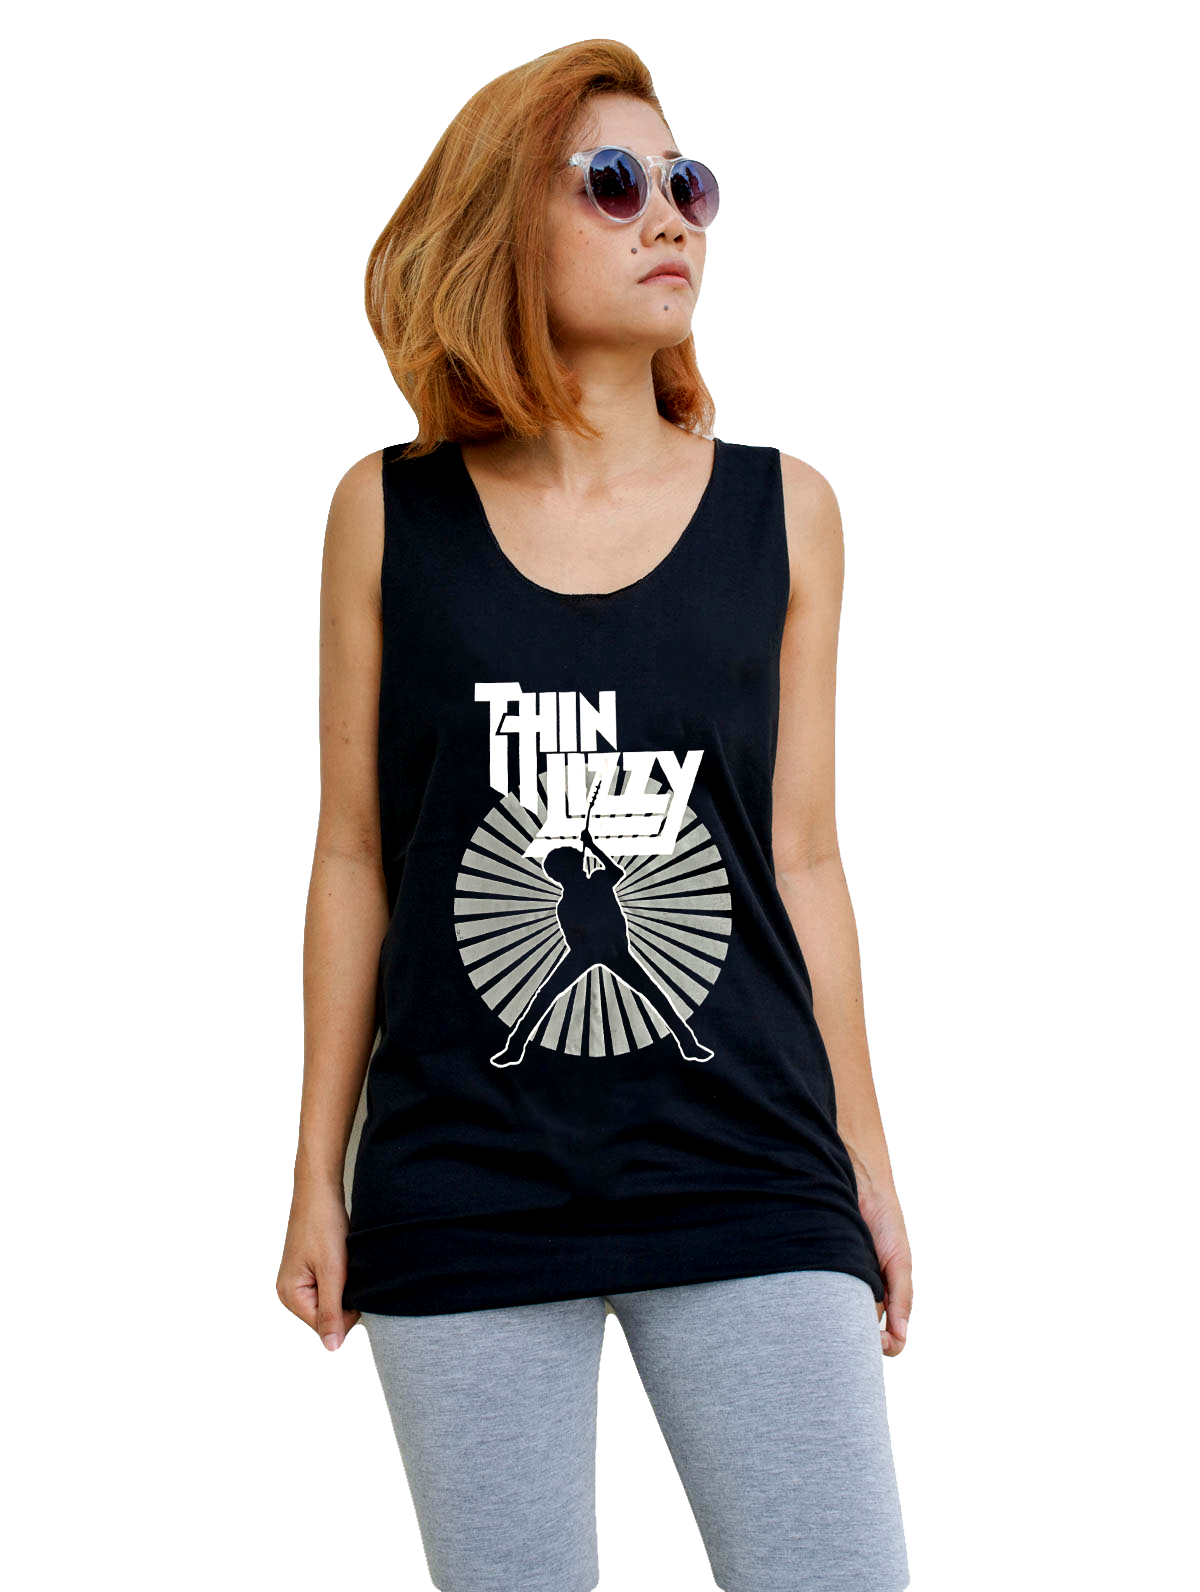 Unisex Thin Lizzy Tank-Top Singlet vest Sleeveless T-shirt